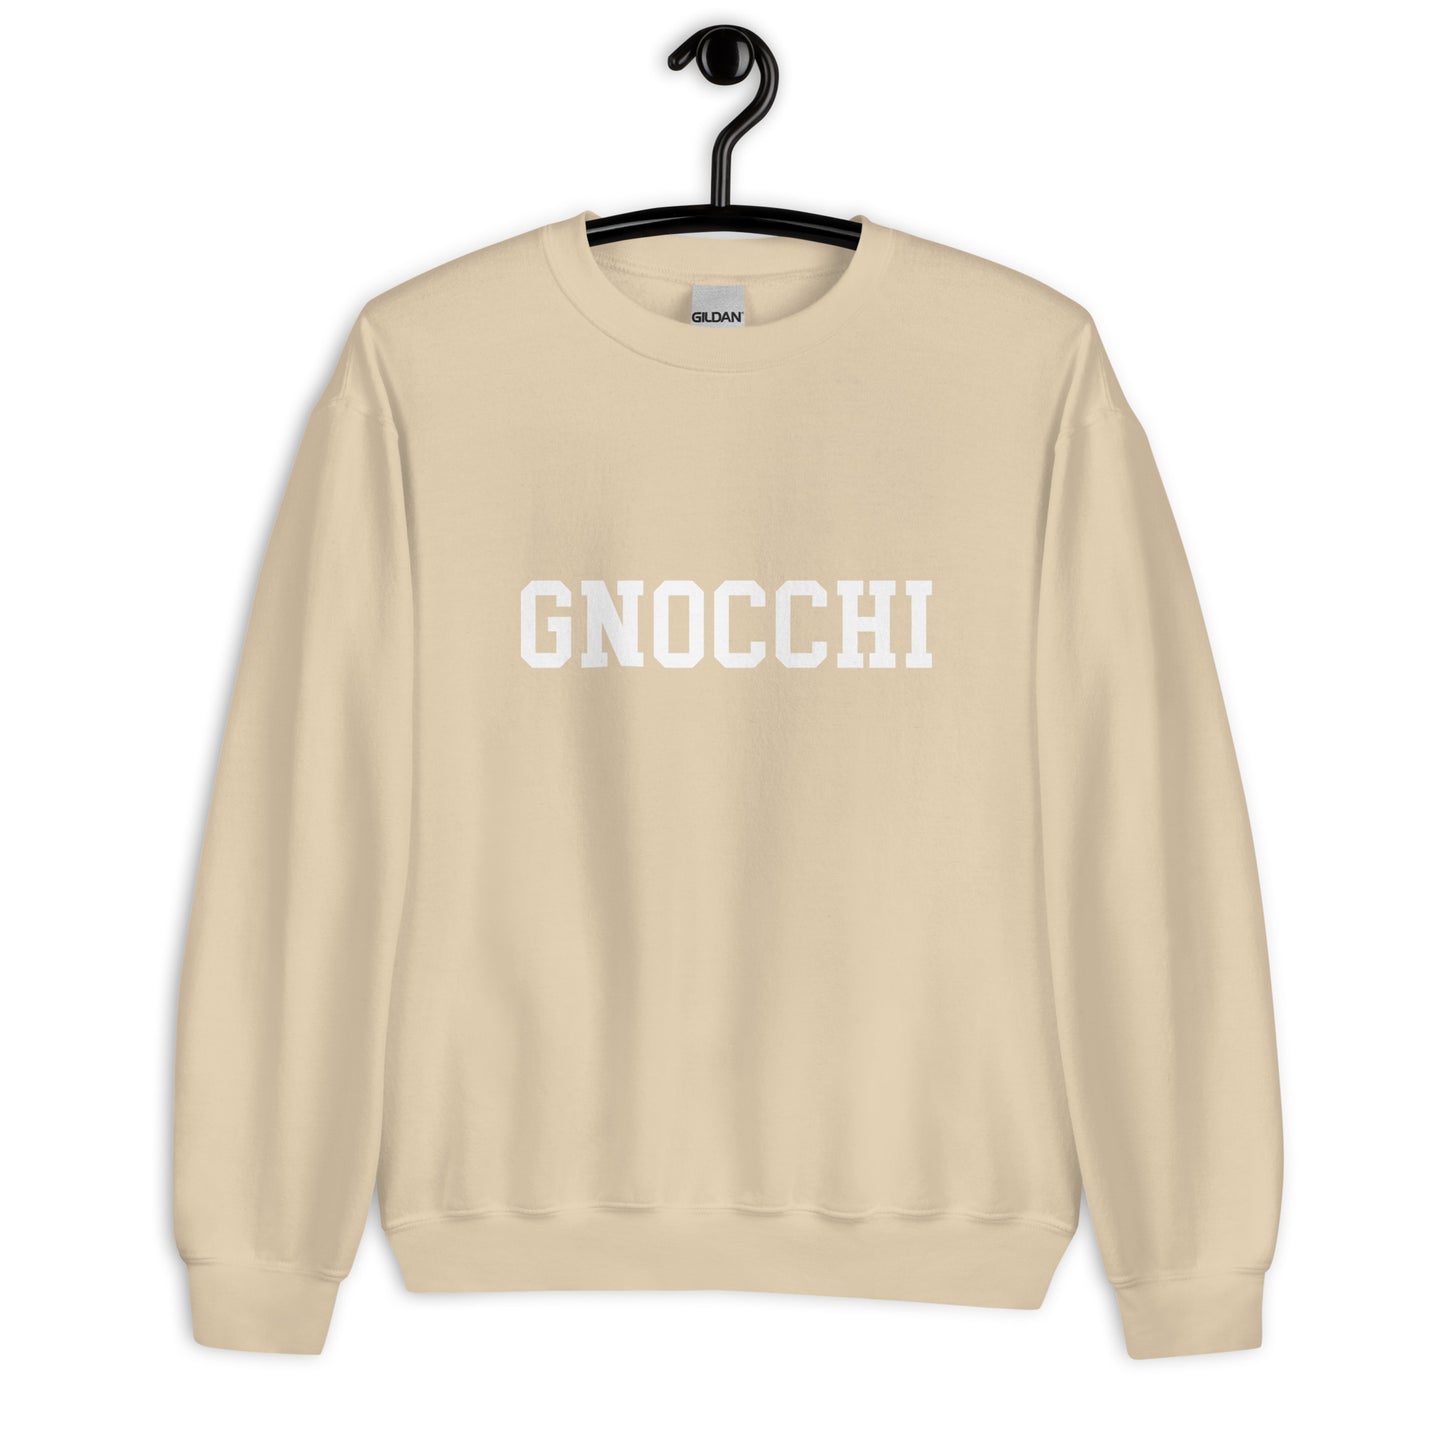 Gnocchi  Sweatshirt - Straight Font